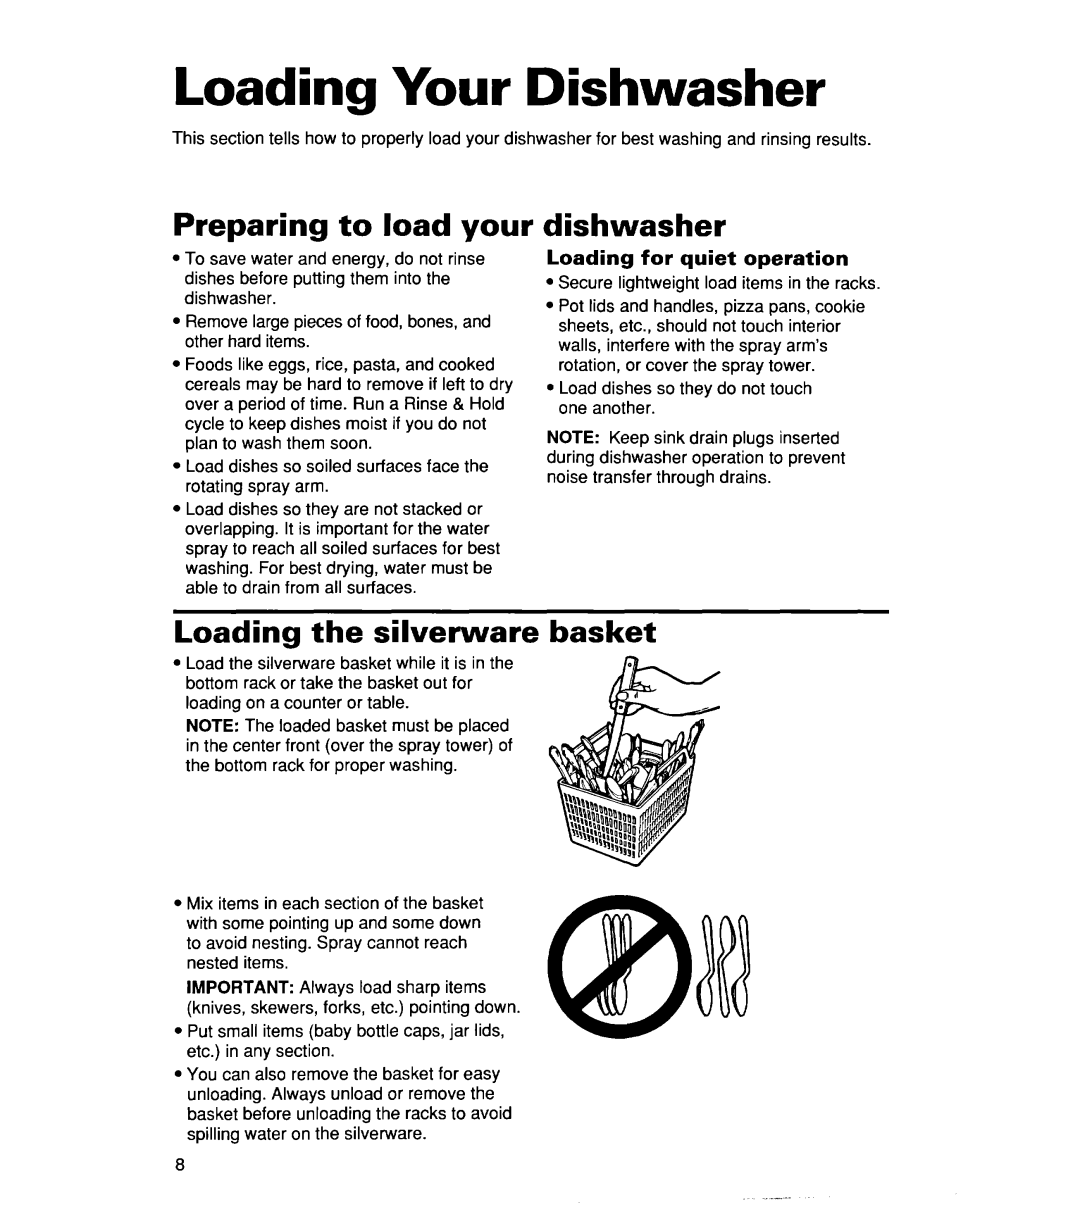 Whirlpool 830, Series 400, 806 Loading Your Dishwasher, Preparing to load your, dishwasher, Loading the silverware basket 